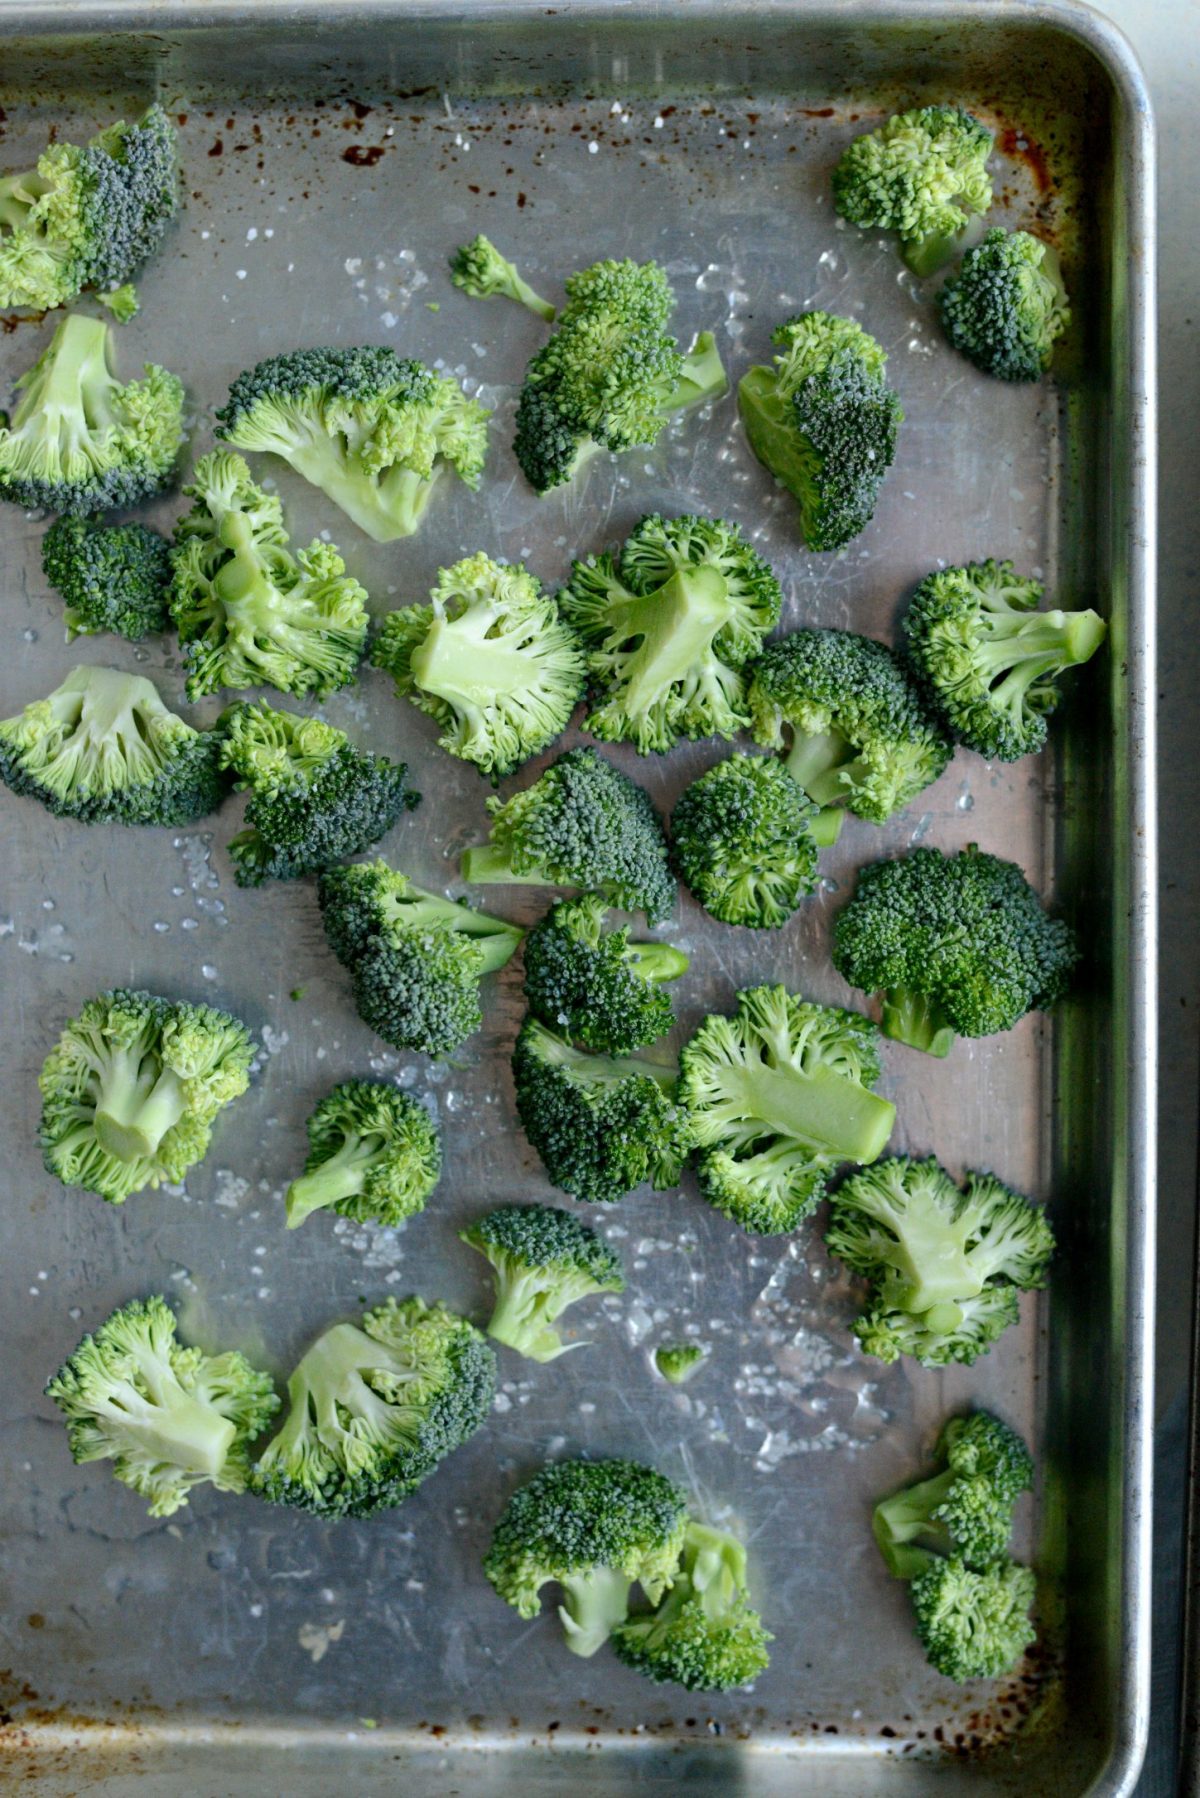 Pan with broccoli florets